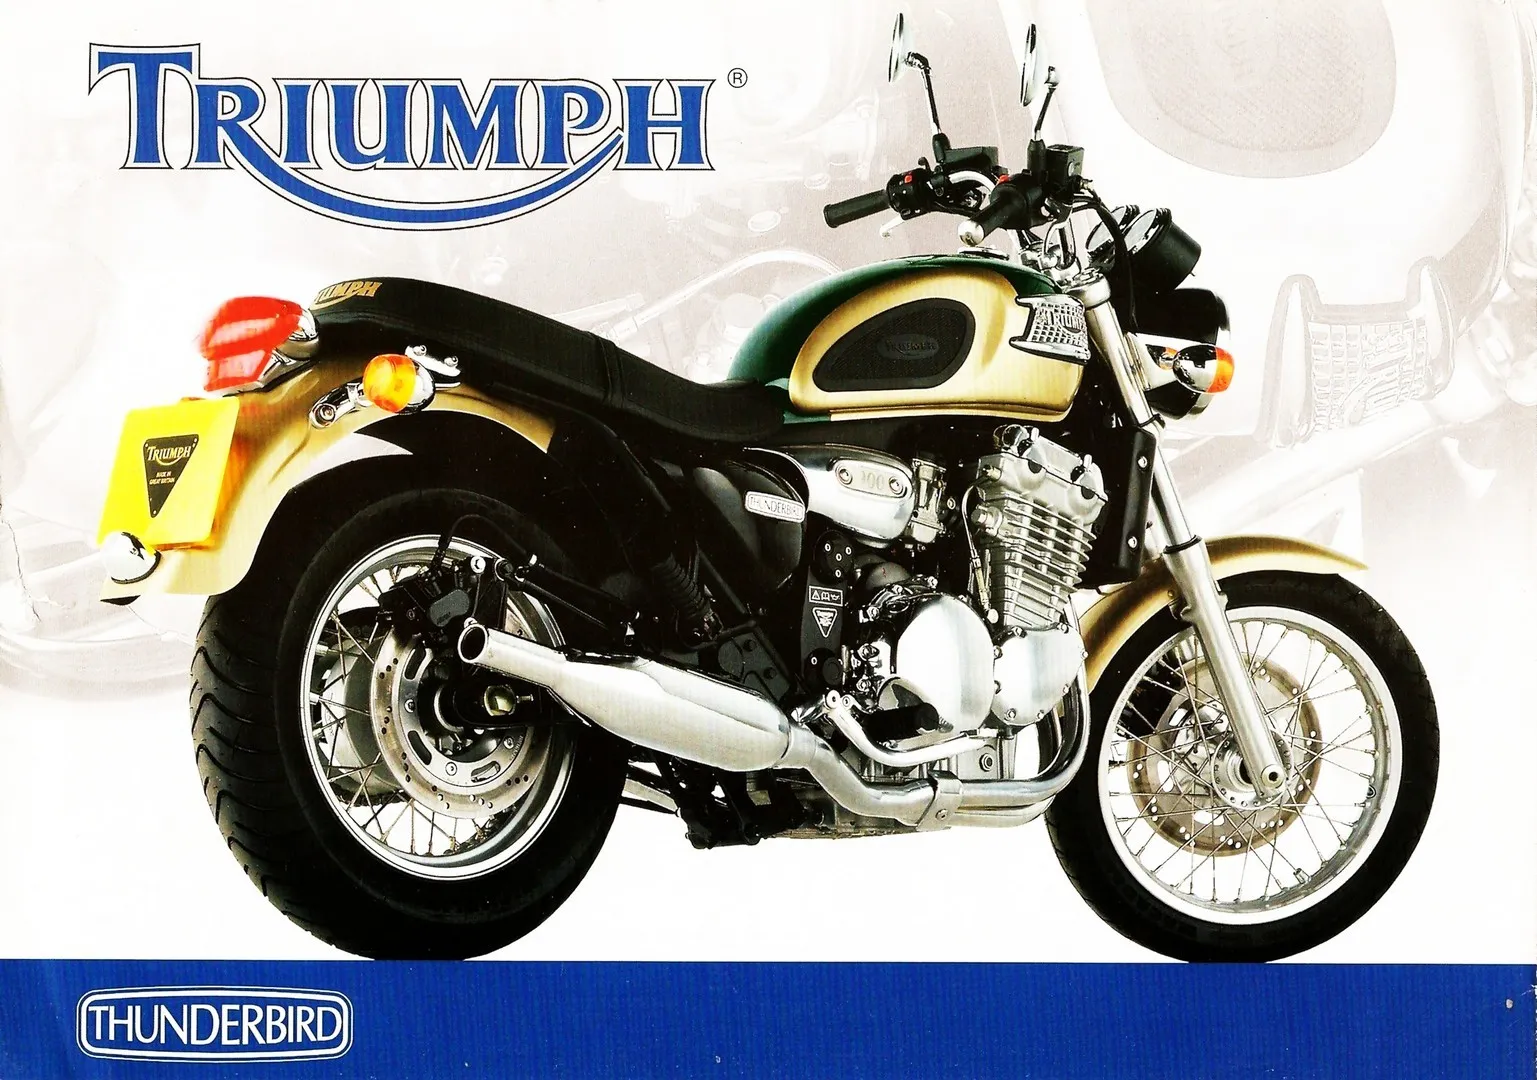 Moto del día: Triumph Thunderbird 900